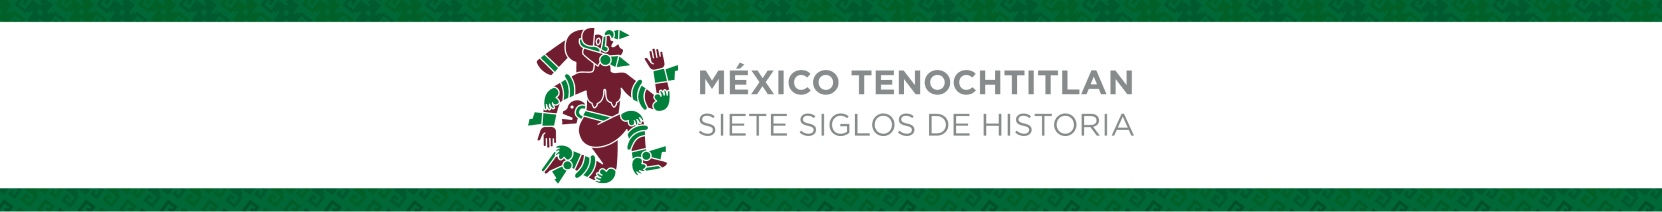 México Tenochtitlan siete siglos de historia